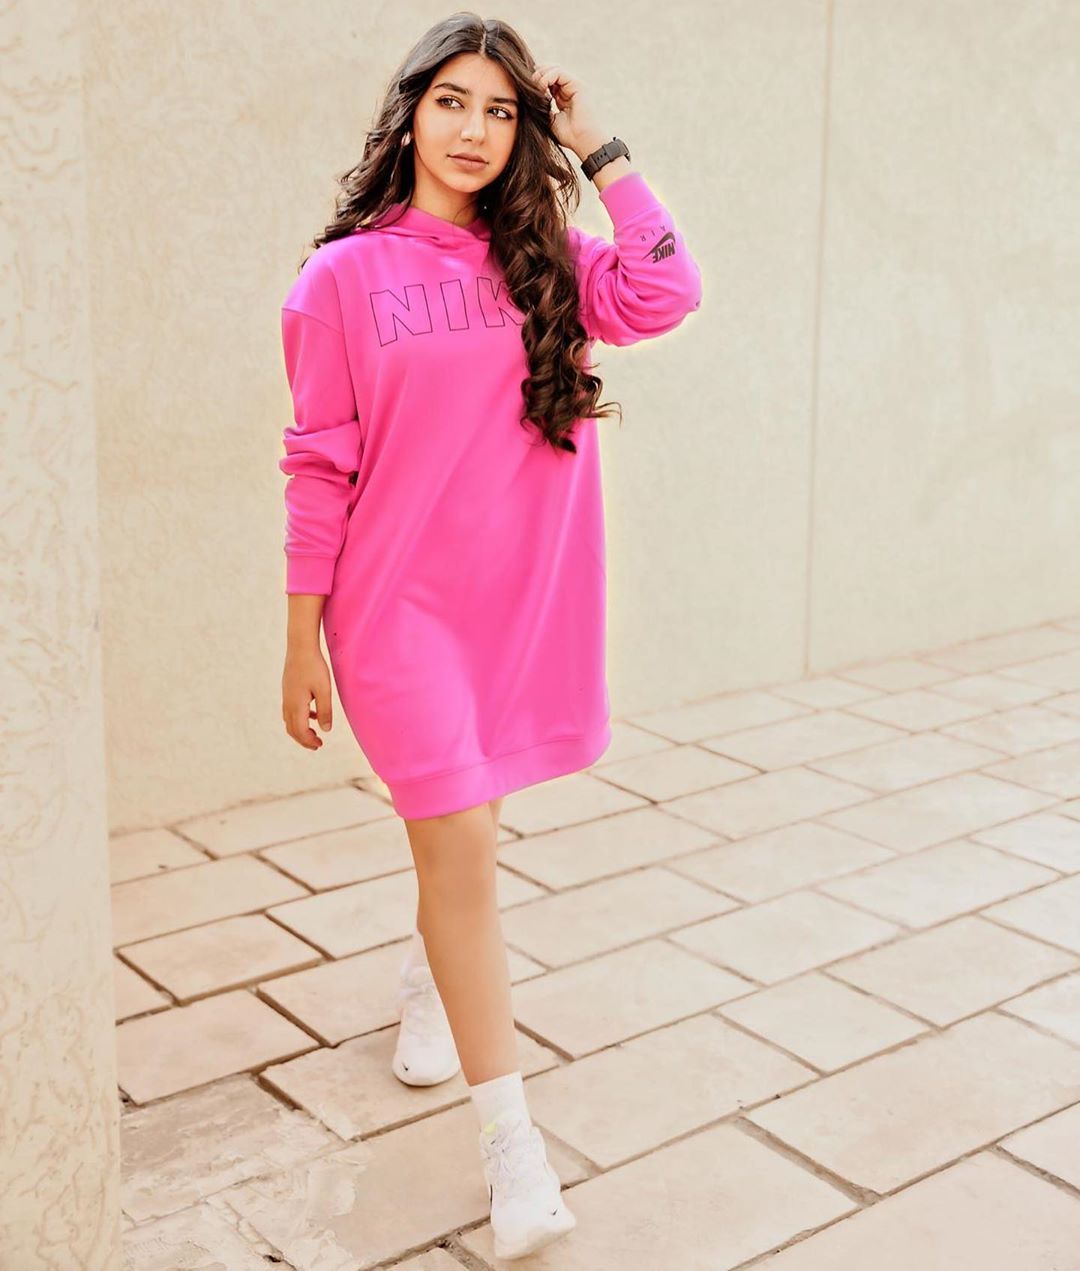 Ghrour Safar Pink Dress Teen Girl Photo 04